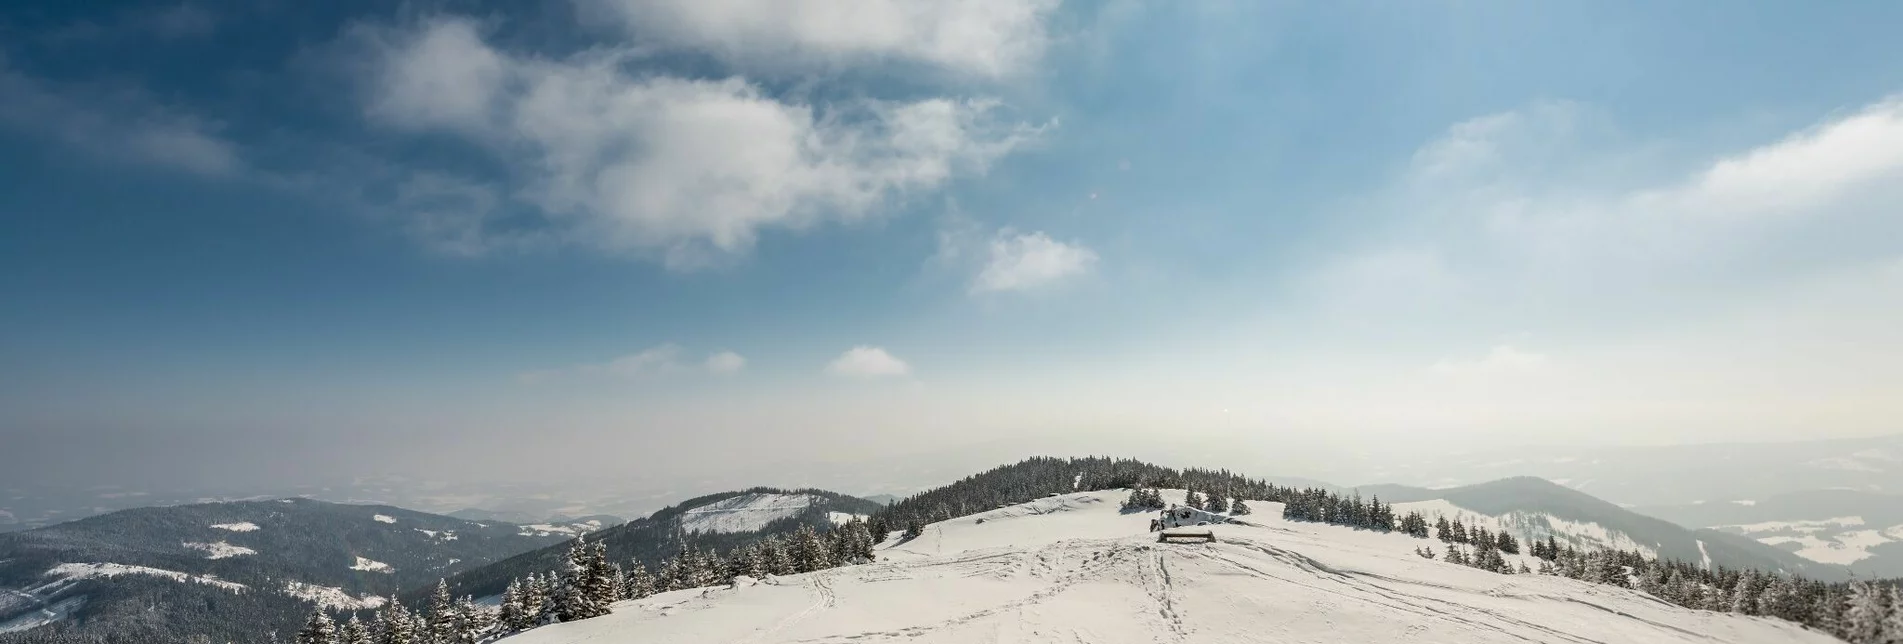 Ski-nordic-classic Gaberl – Altes Almhaus – Salzstieglhaus - Touren-Impression #1 | © Region Graz